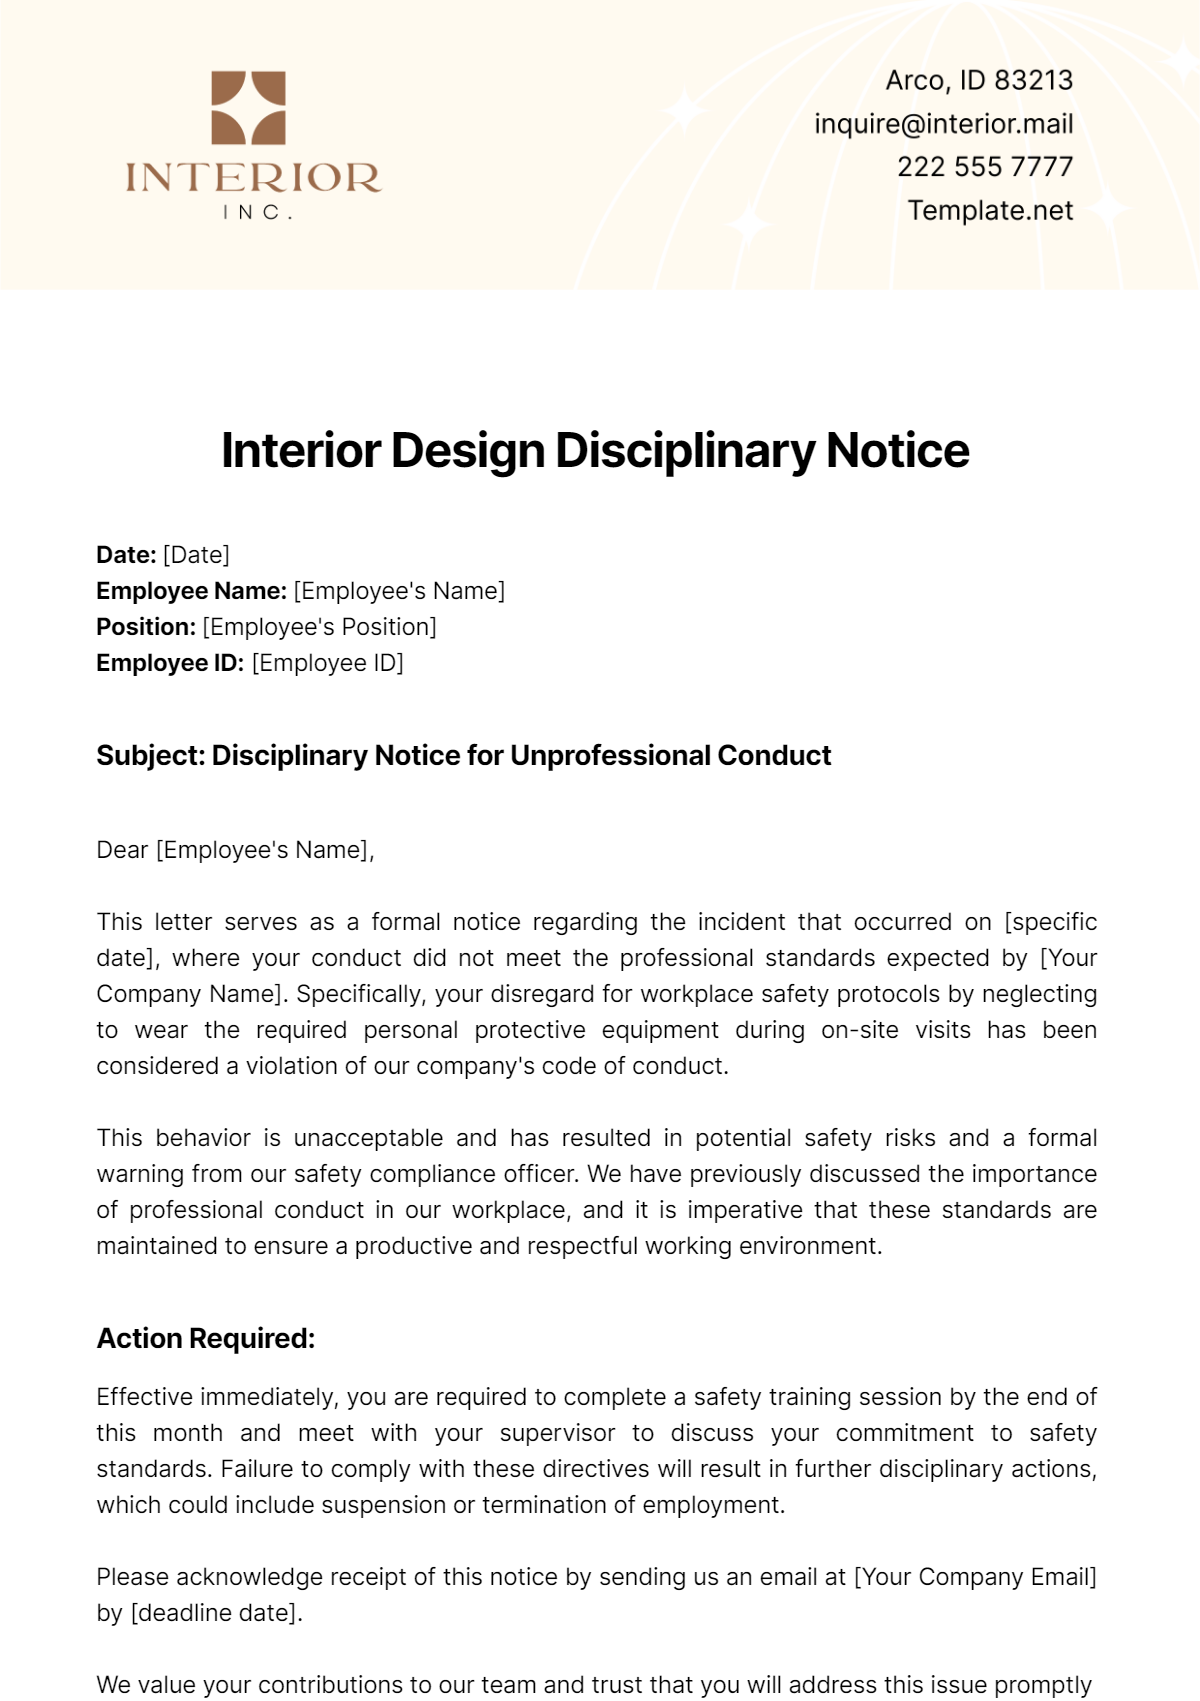 Free Interior Design Disciplinary Notice Template